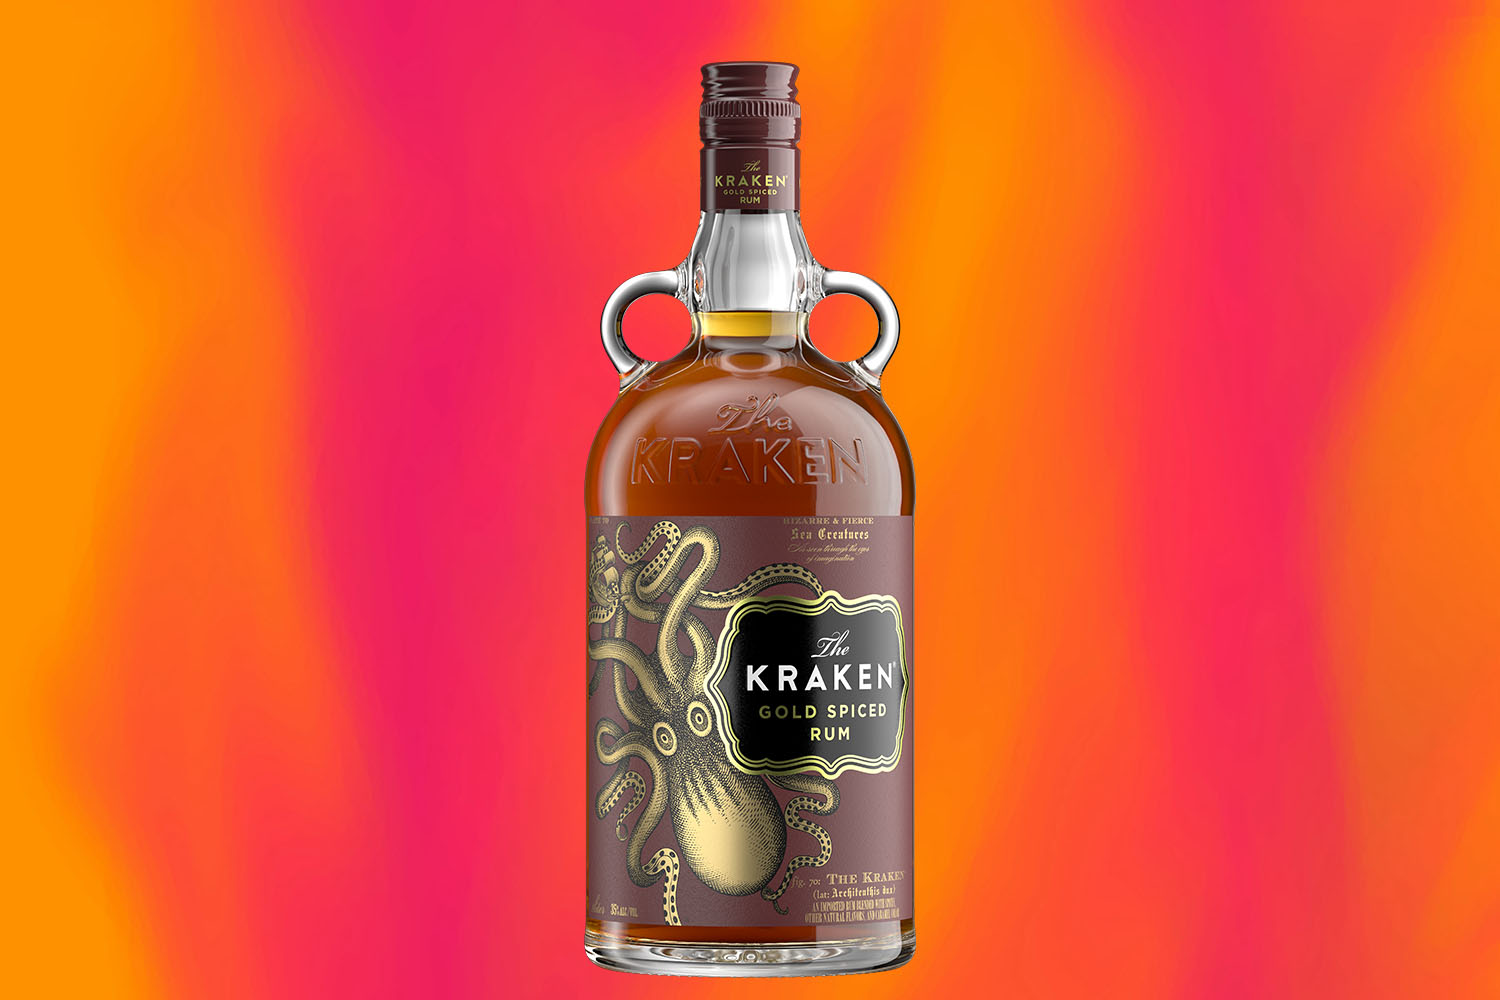 a bottle of Kraken rum on a firey red background